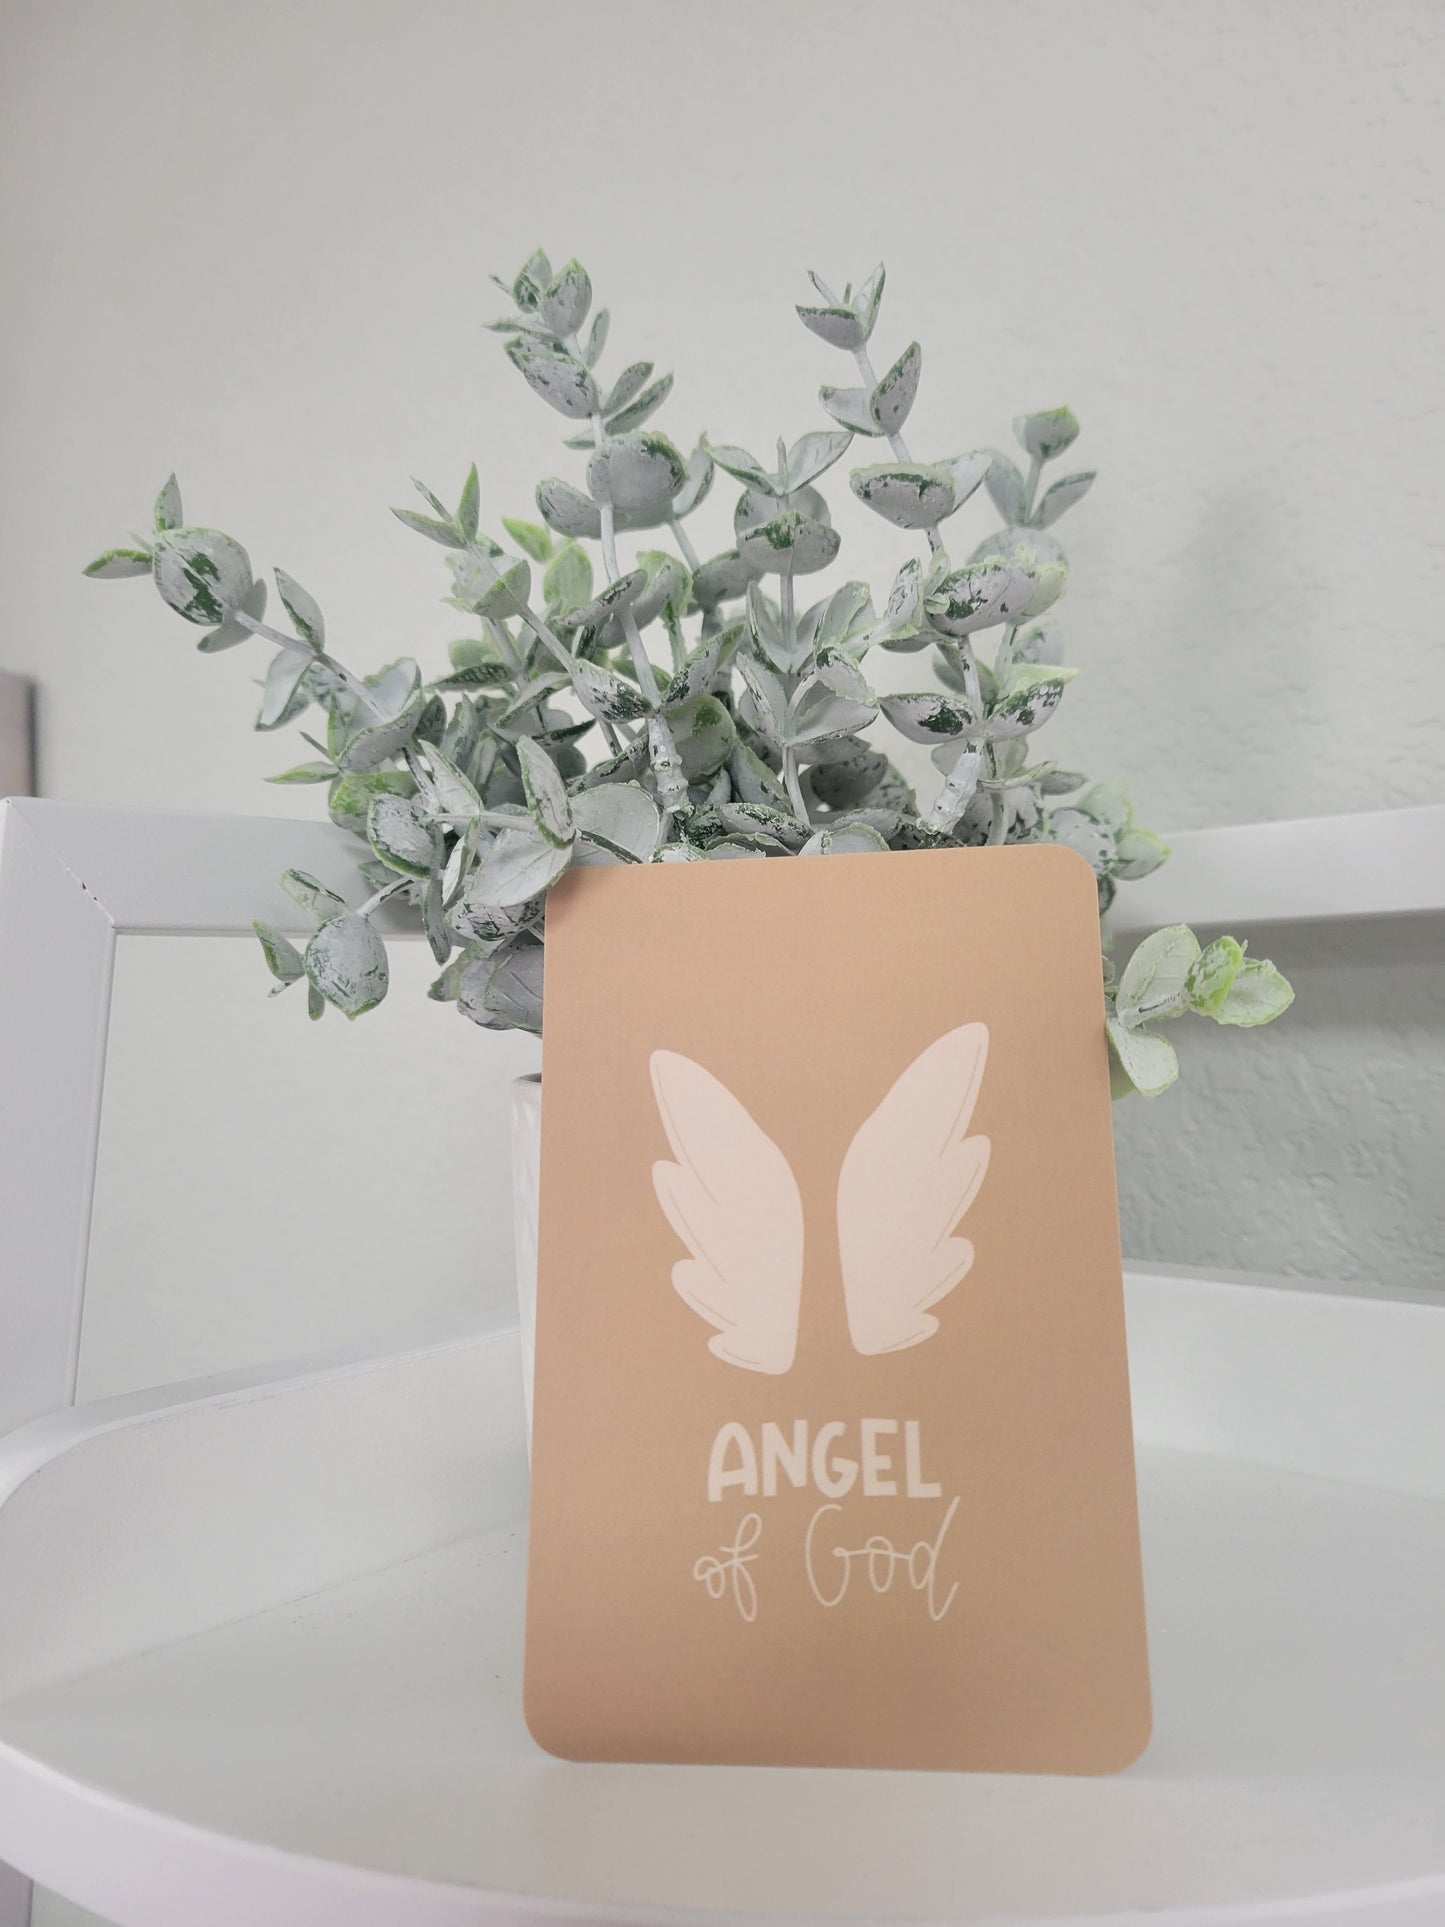 Angel of God Prayer Card